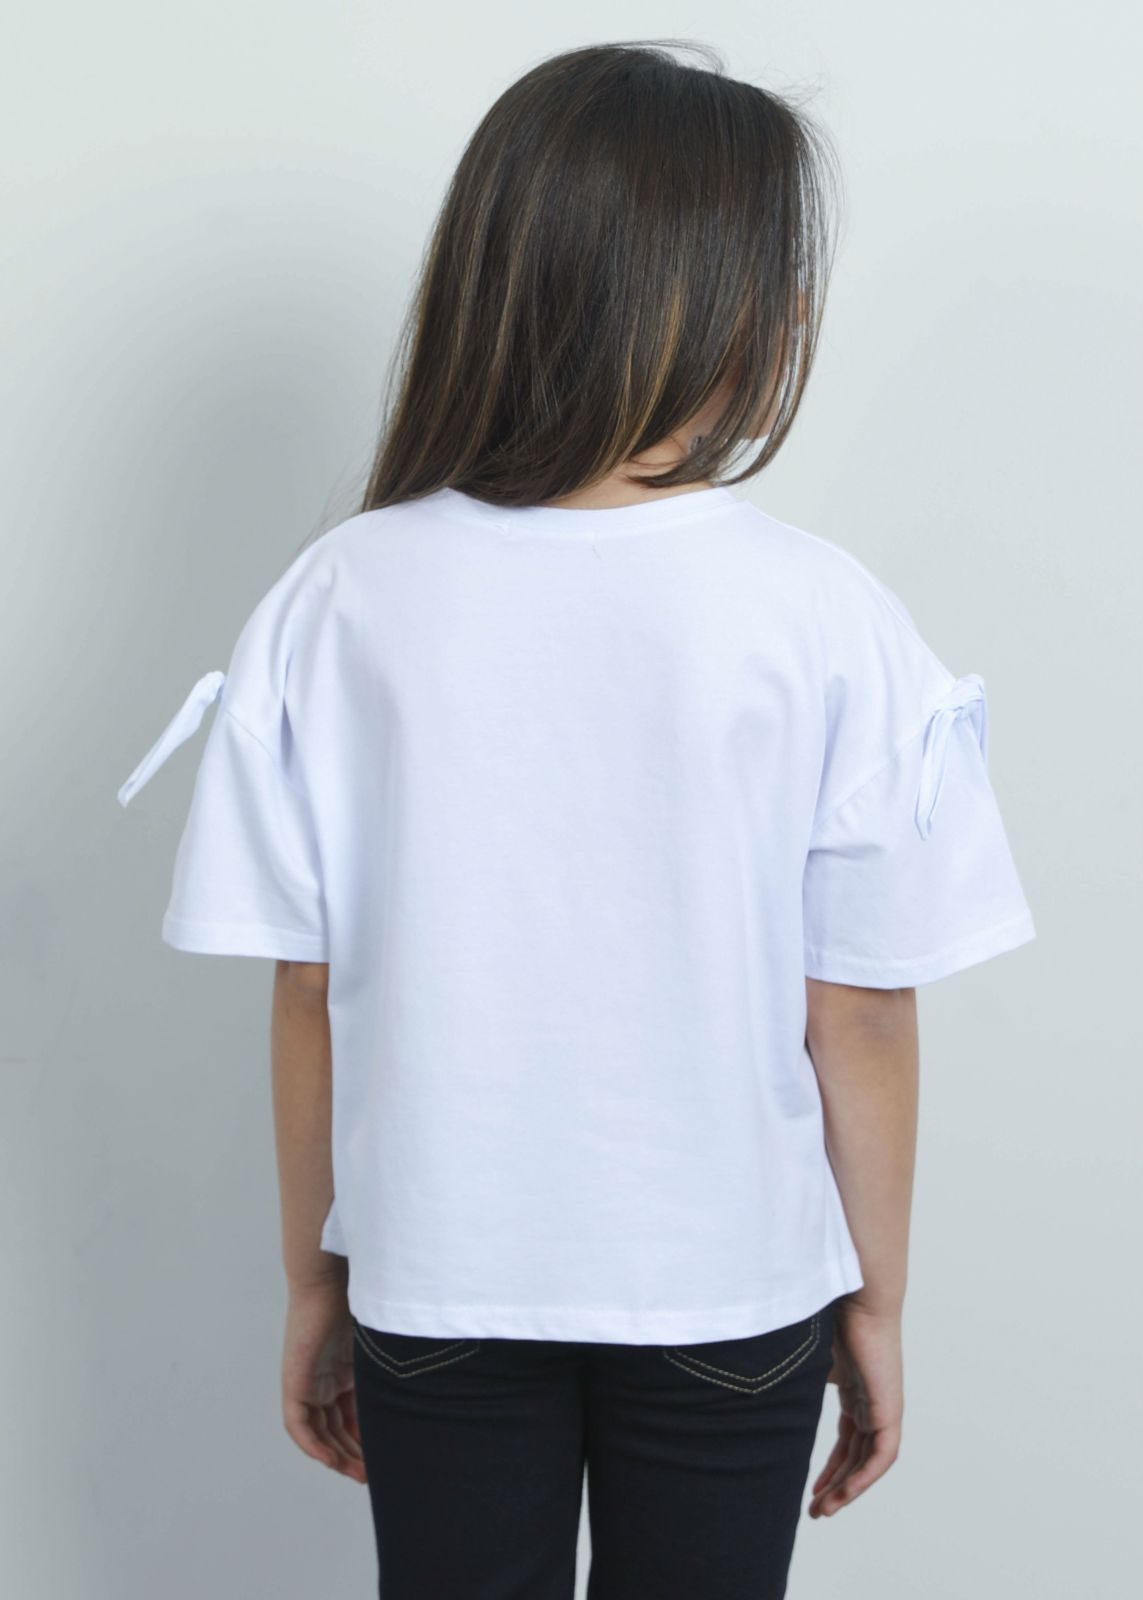 Kids Girl Colorful Clothing|61224160065|متجر Parrot لافاميليا Printed الالكتروني T-Shirt|Kids